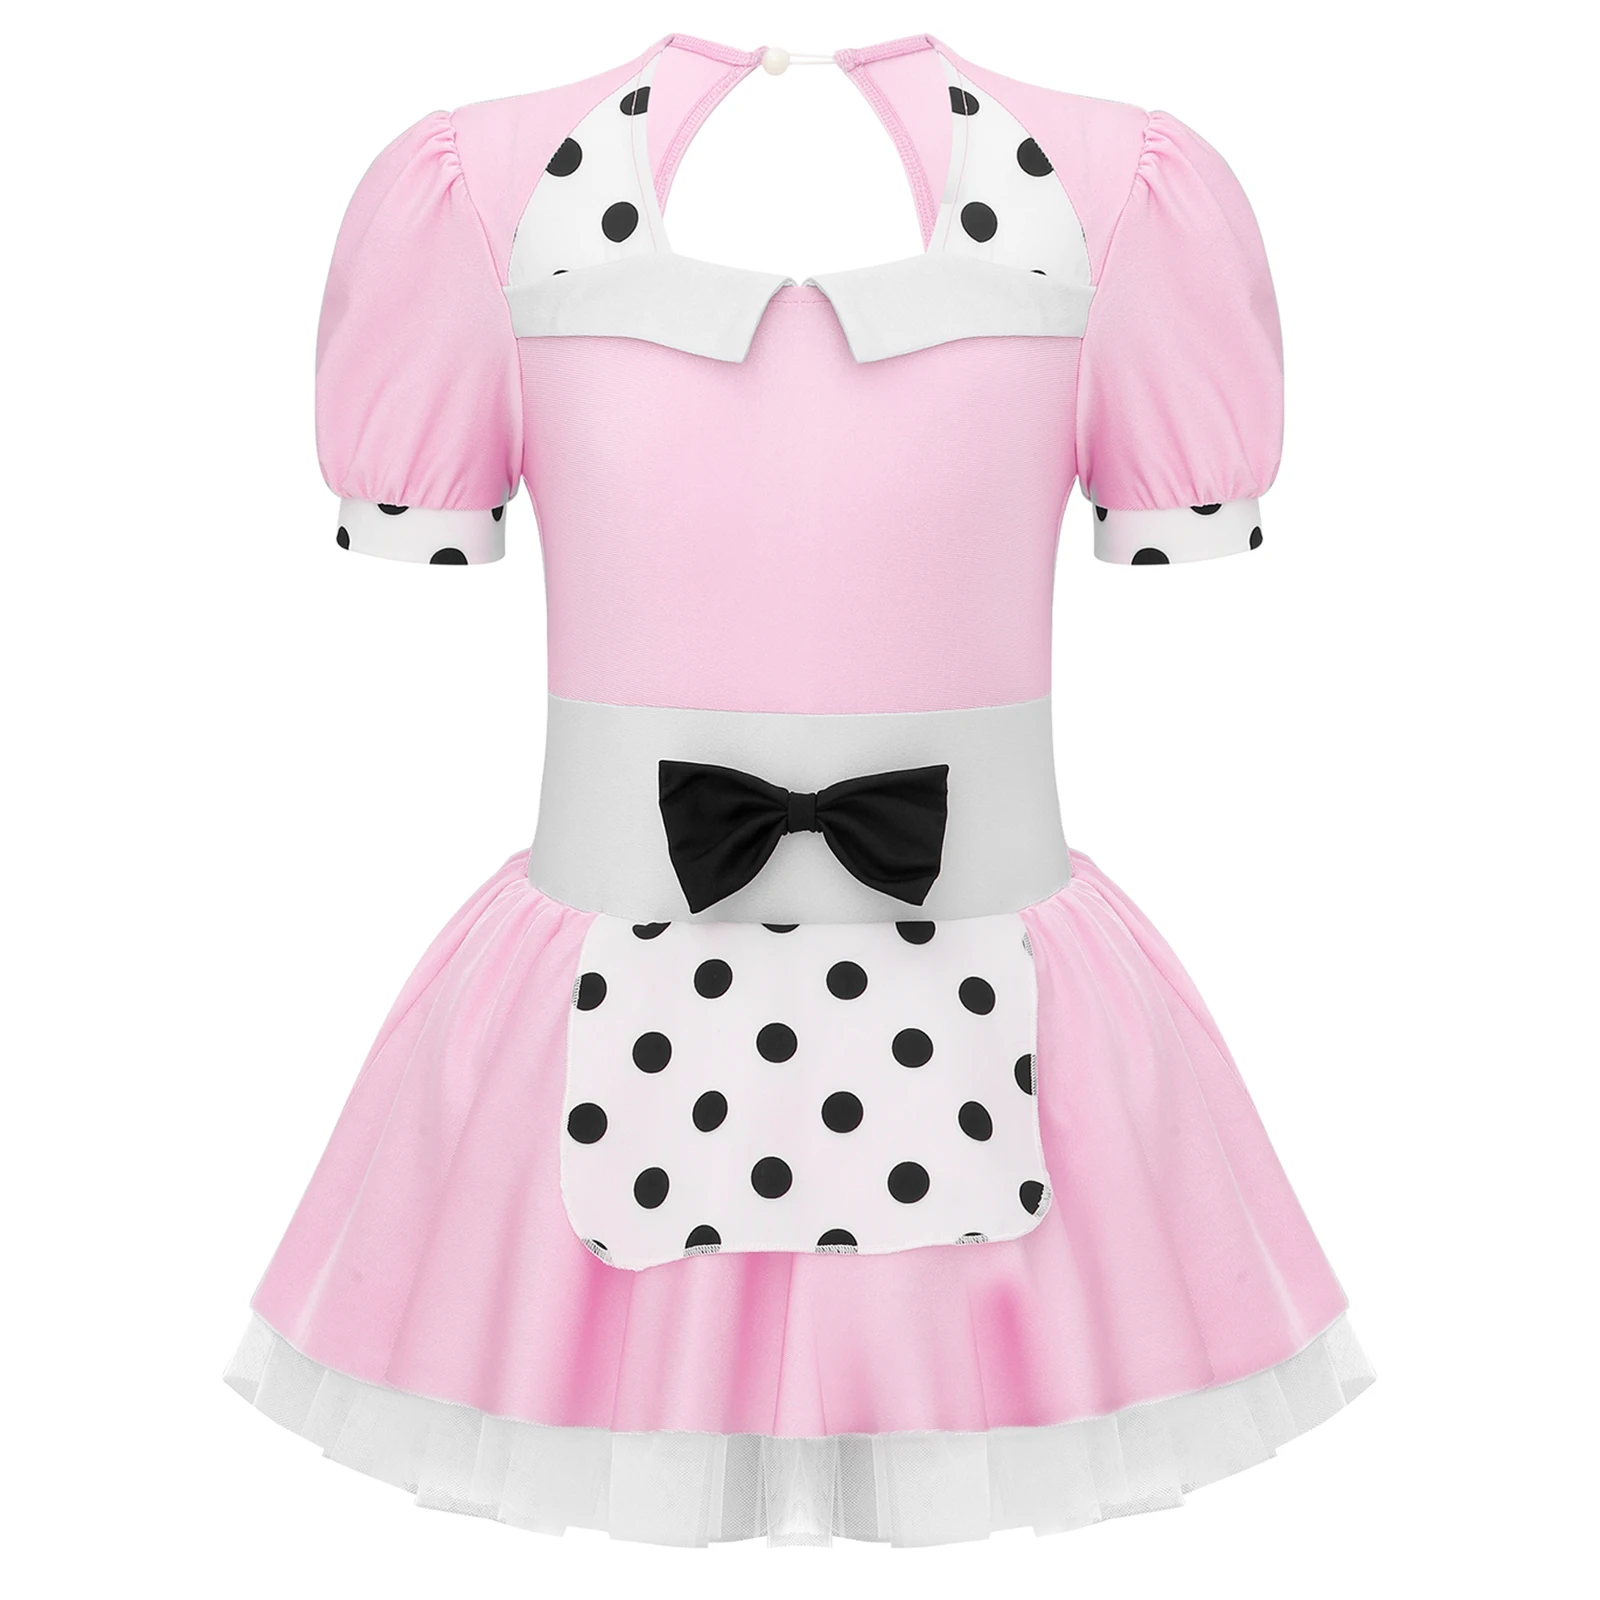 

Kids Maid Costumes Uniforms Girls Halloween Party Fancy Dress Short Sleeve Patchwork Polka Dots Print Bowknot Tutu Dance Dress